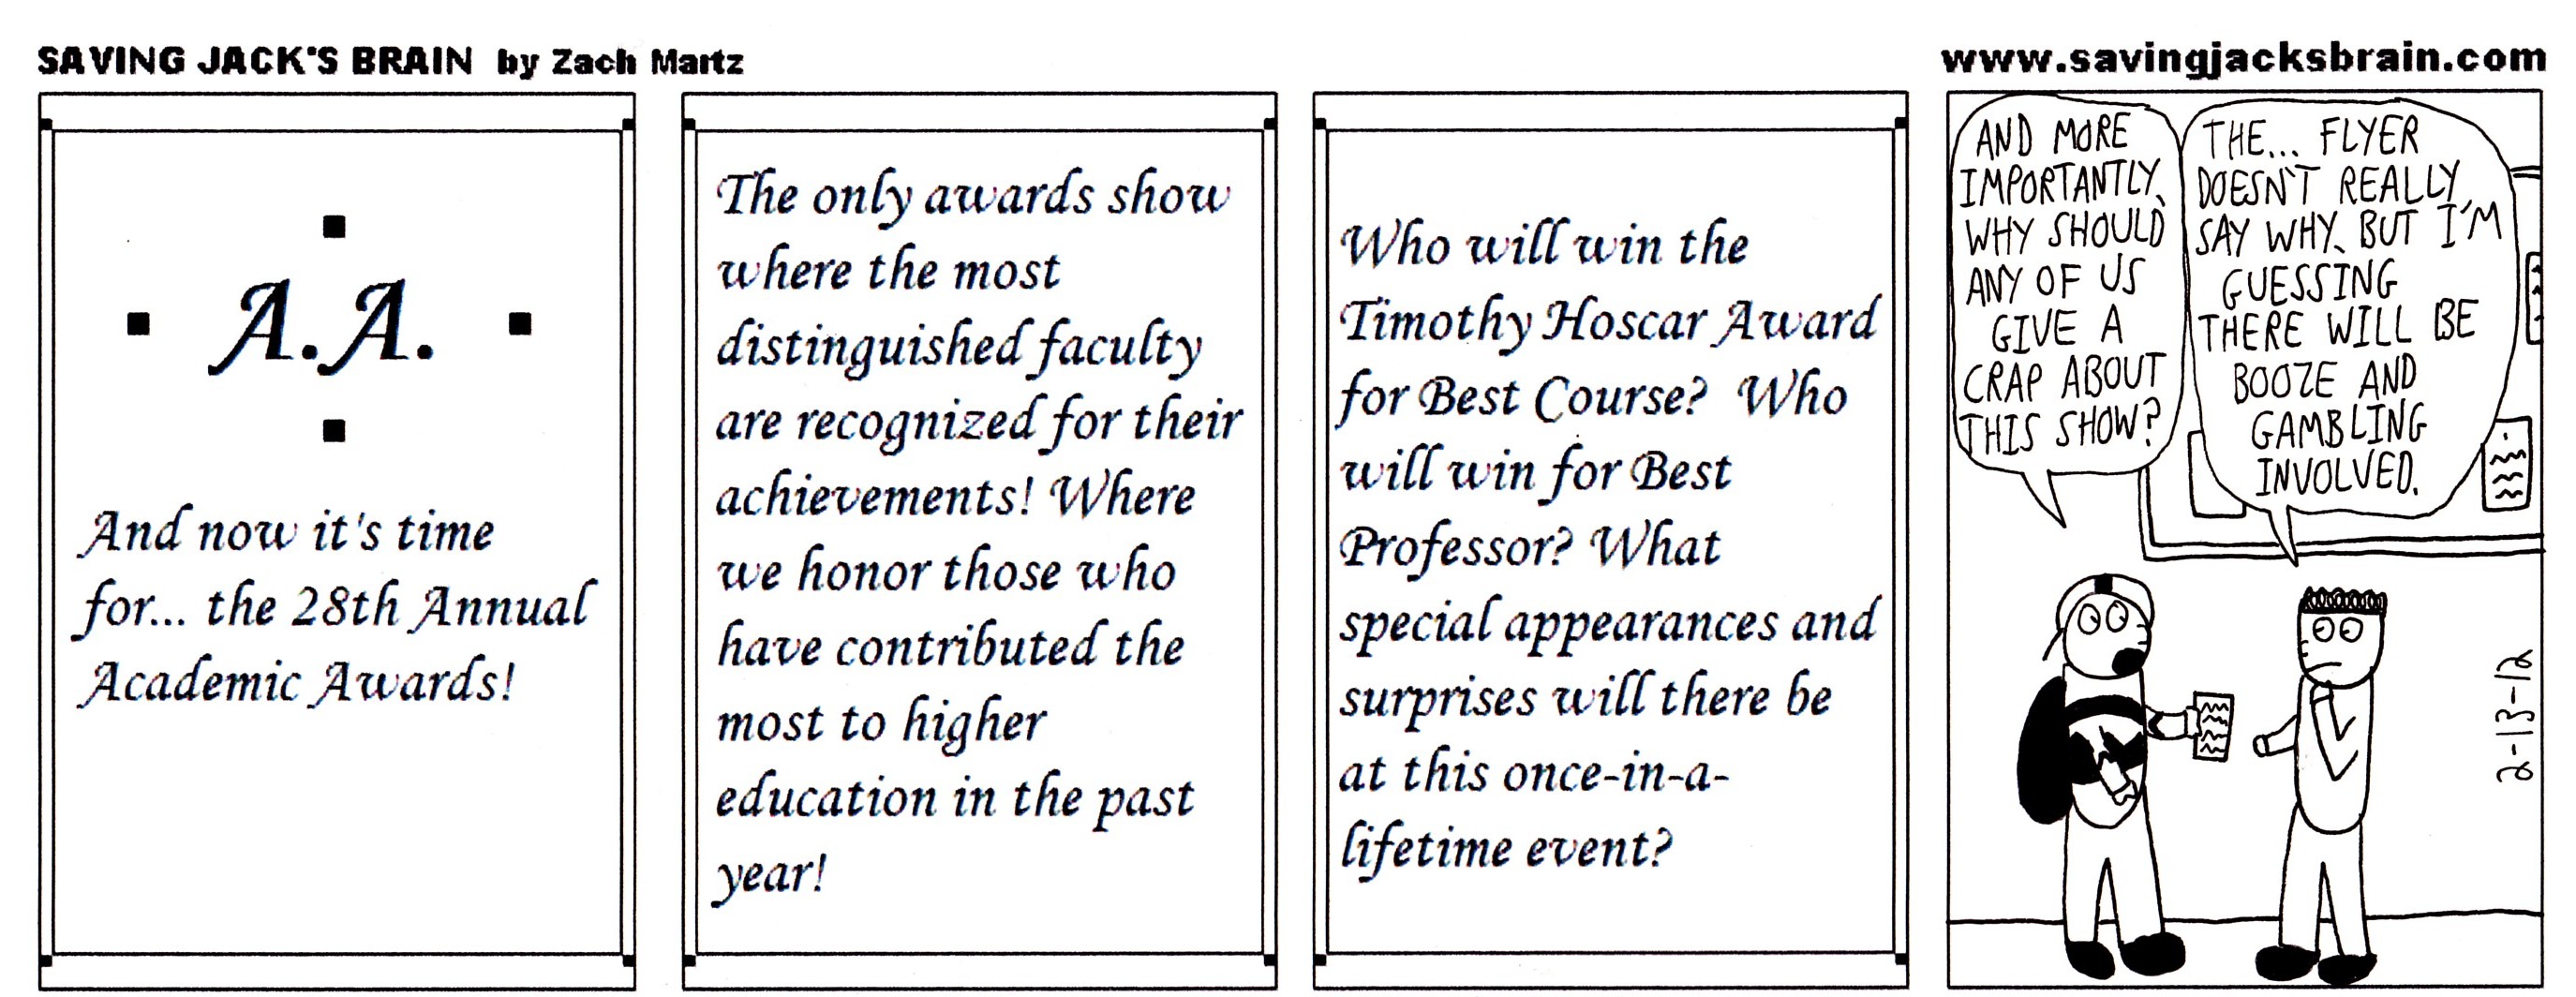 The Academic Awards